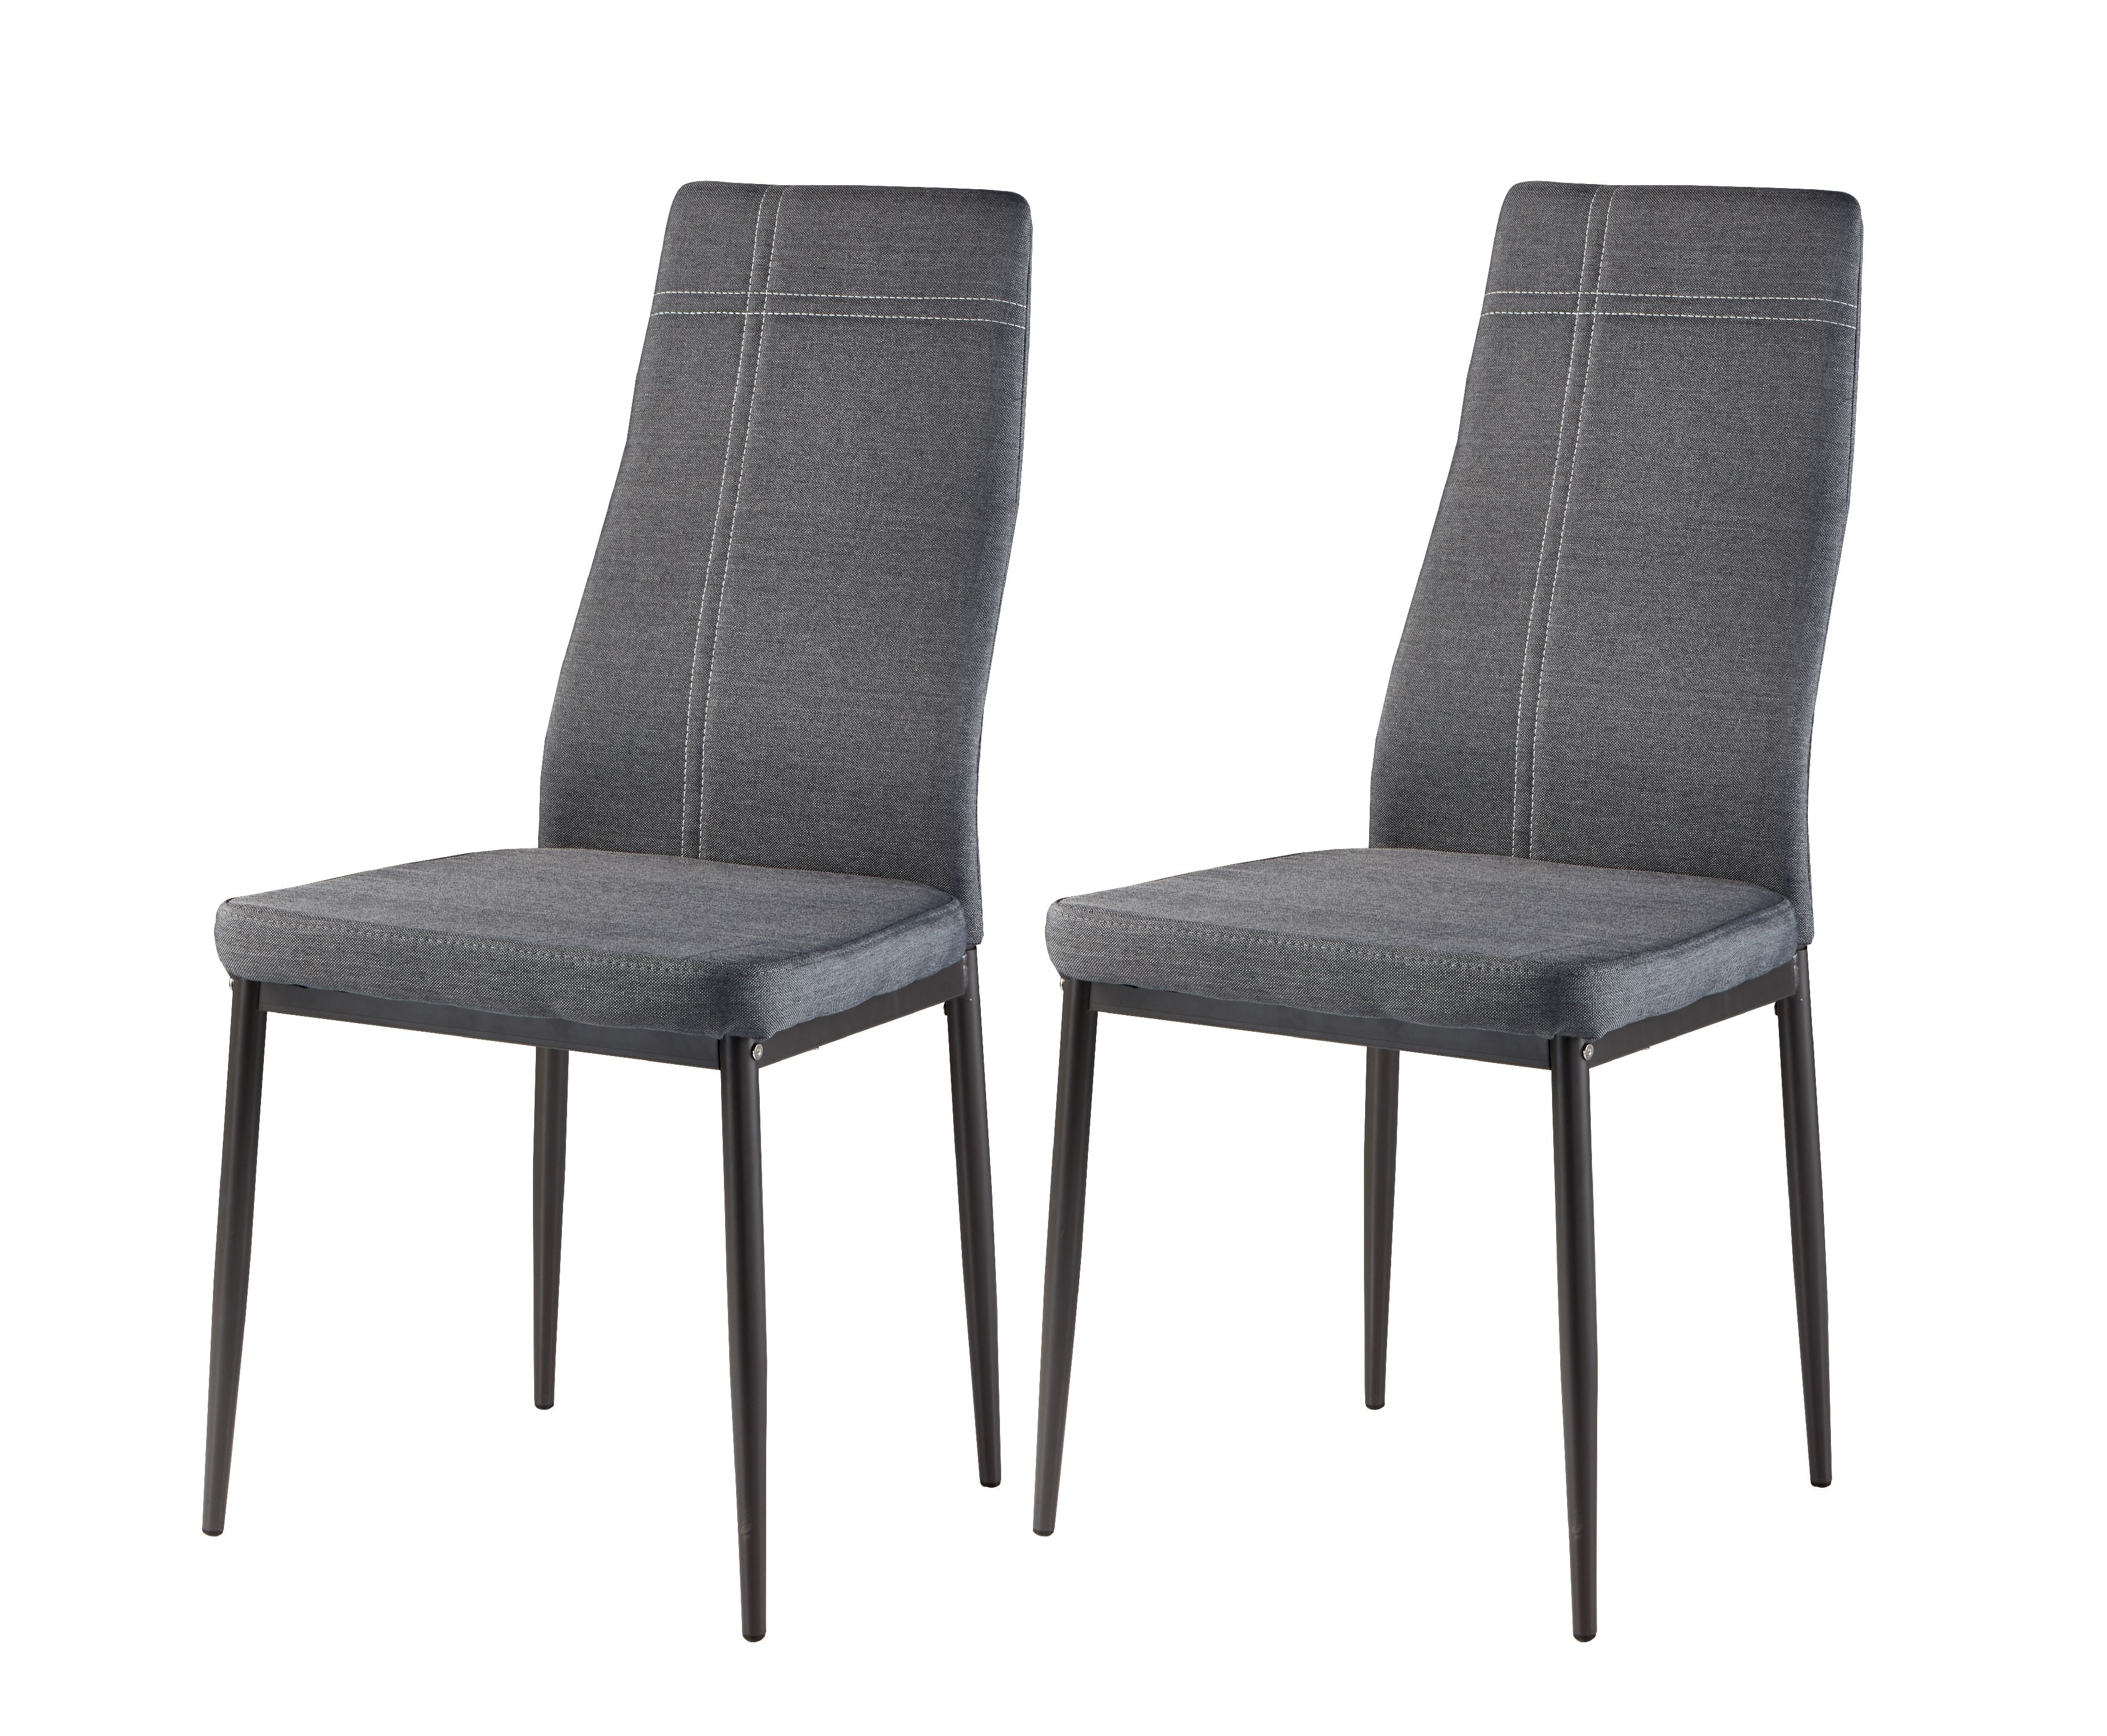 Bri Kitchen Dining Chairs, Gray Fabric & Metal Frame, Modern (Set Of